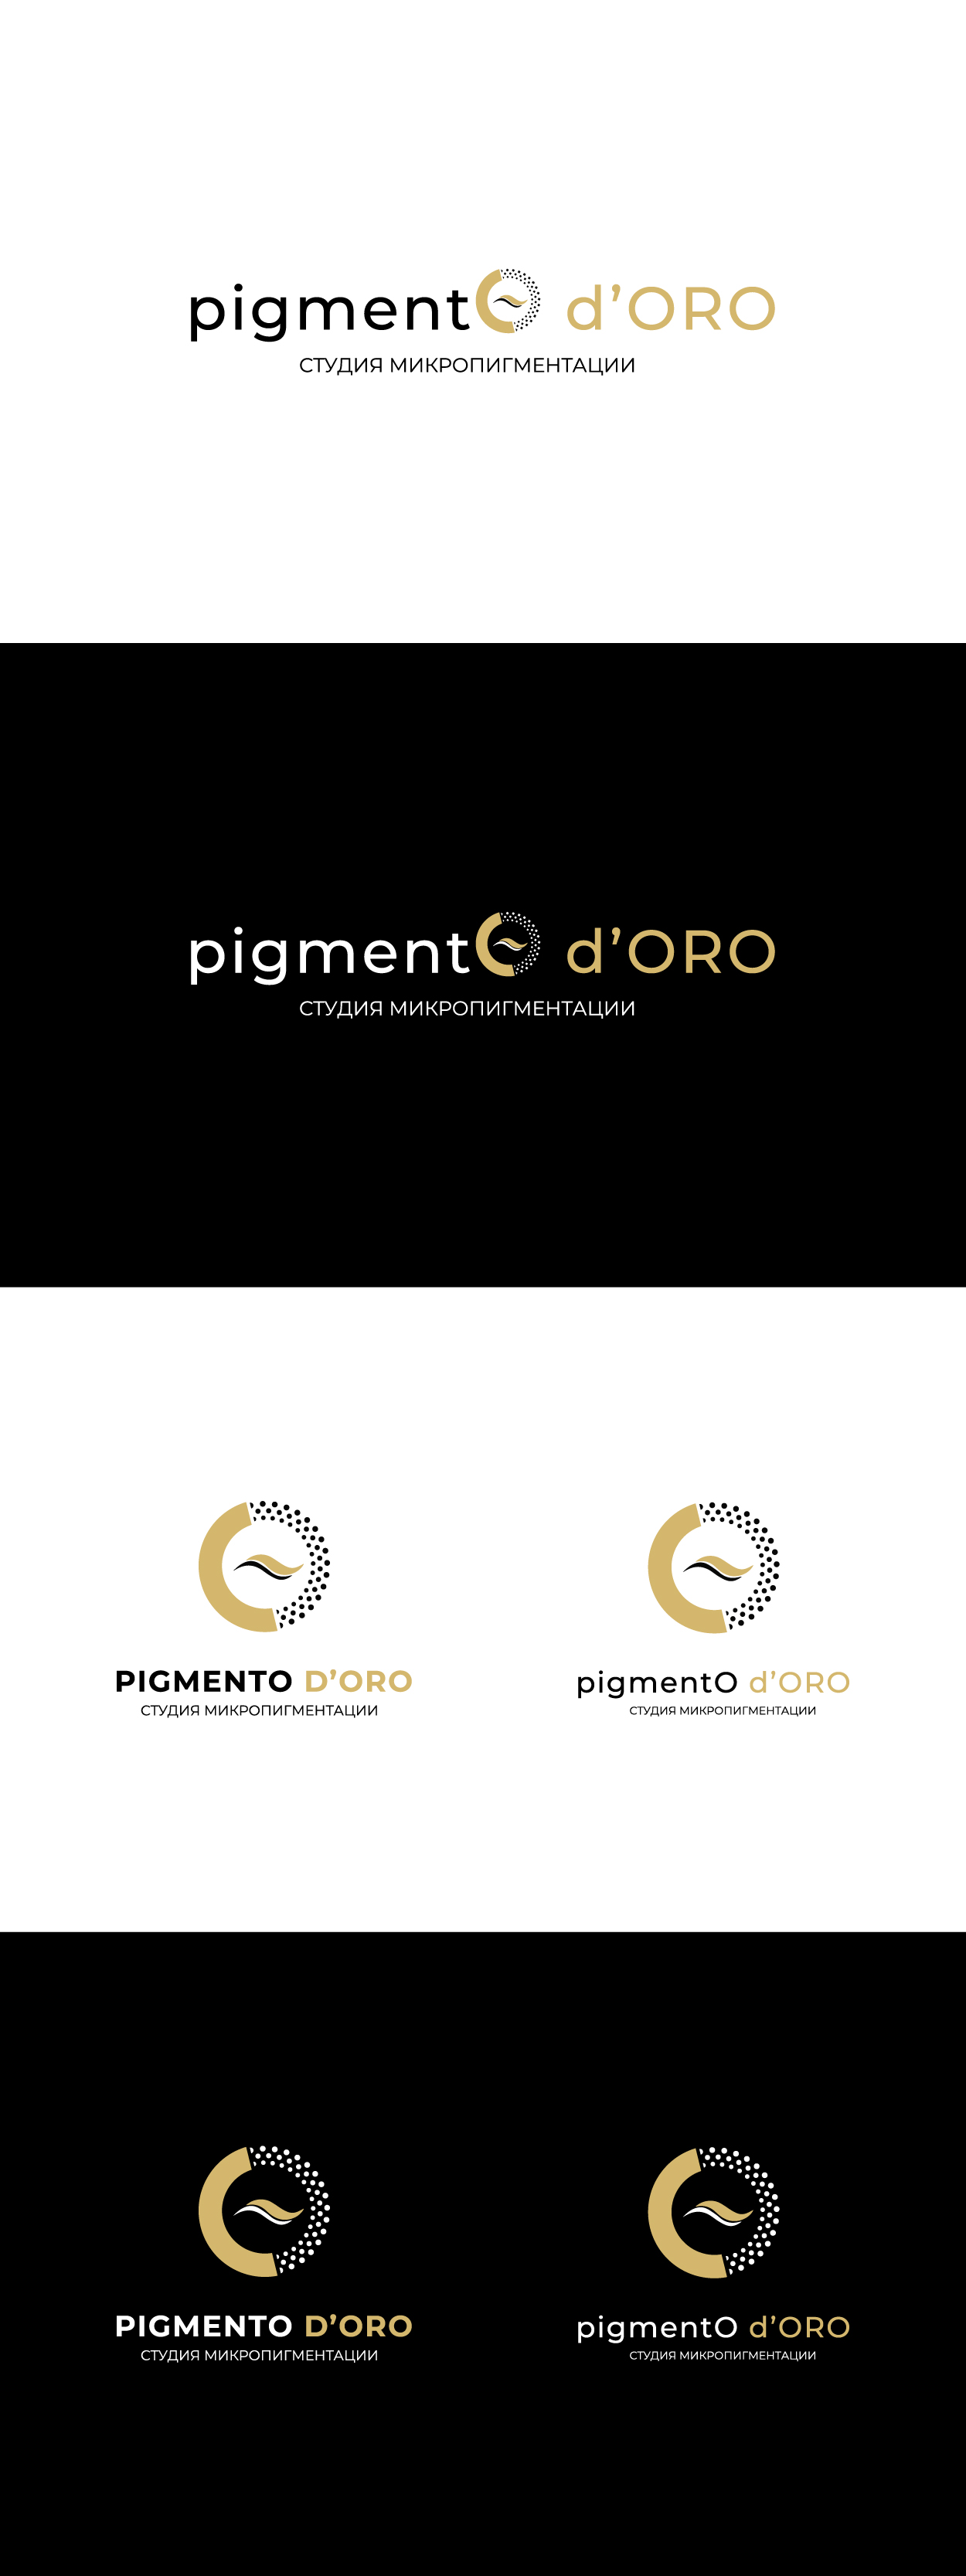 pigmentO d’ORO8.jpg